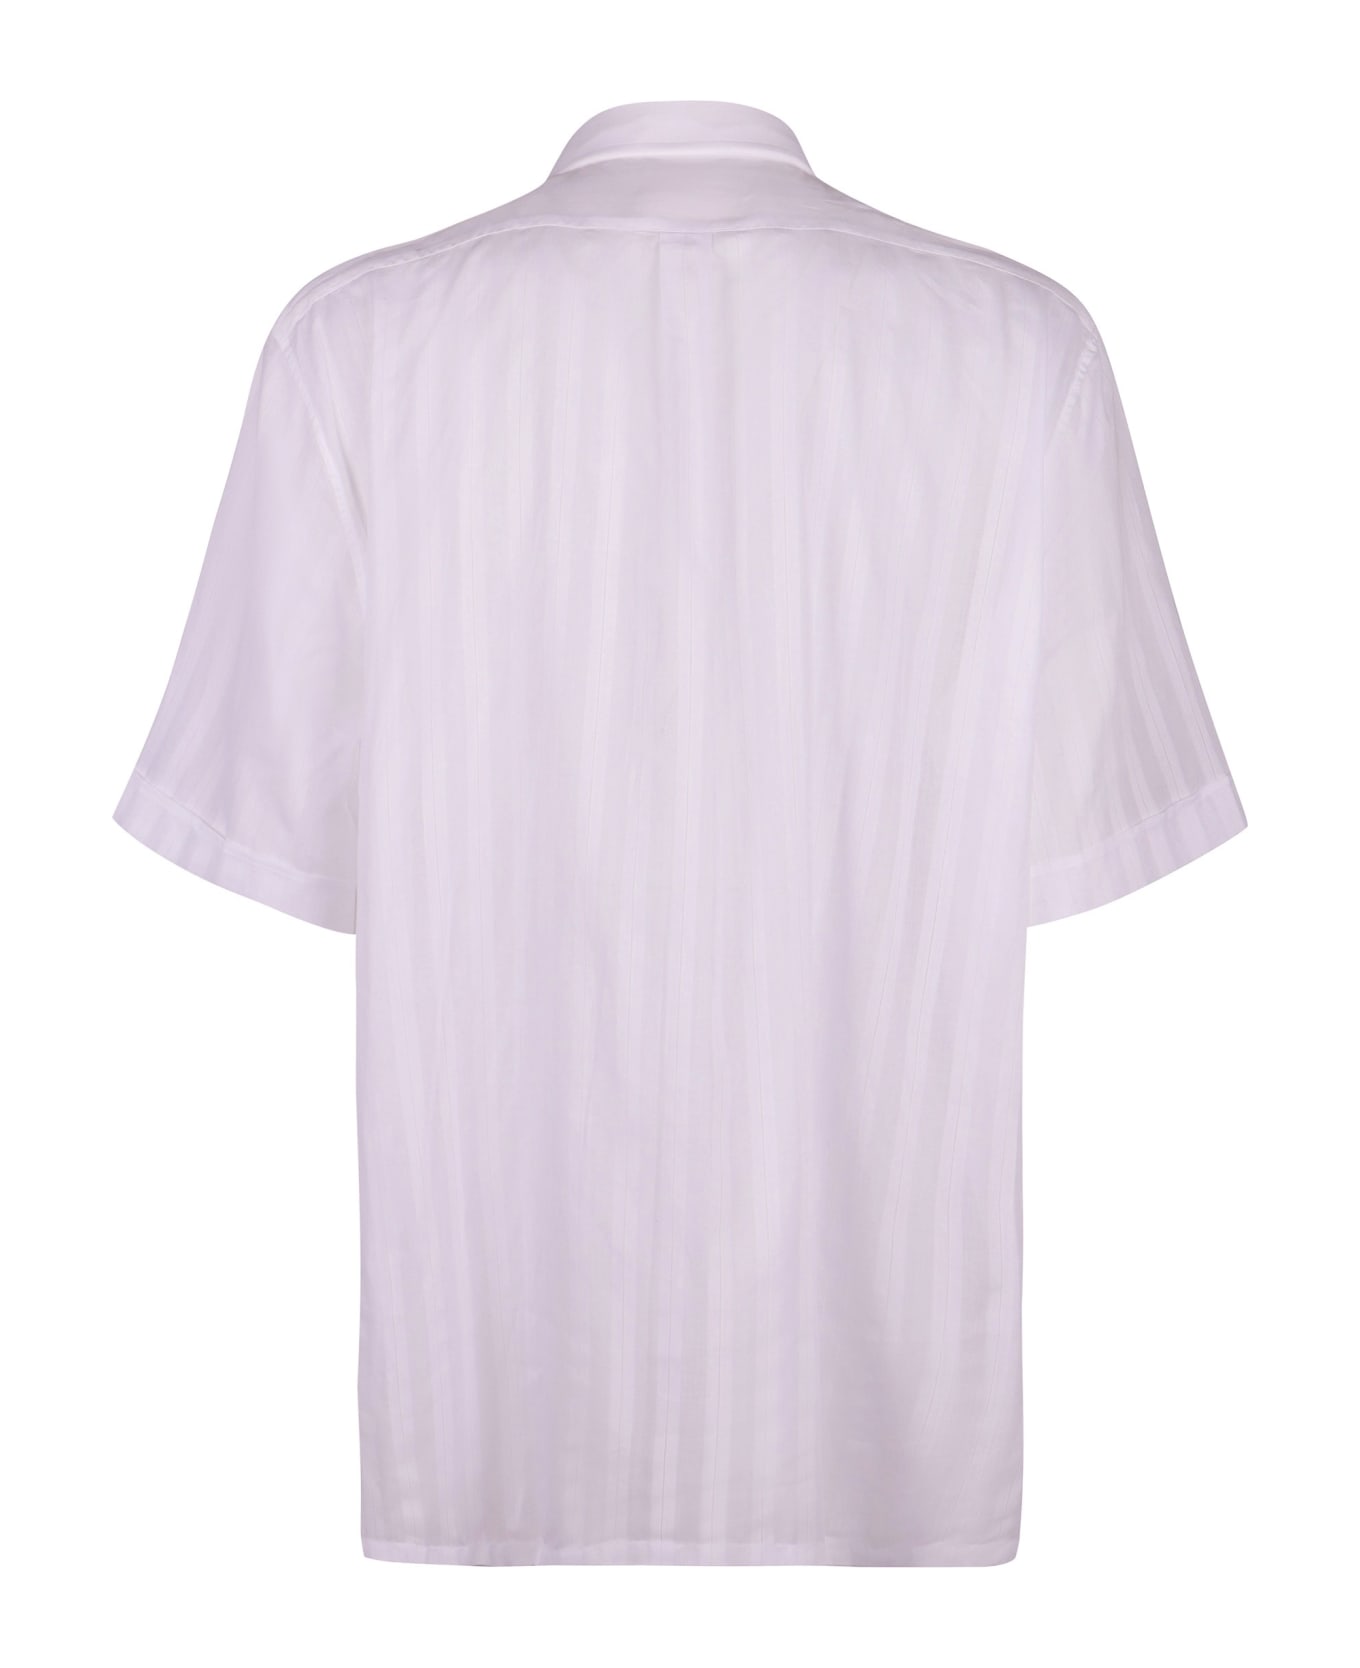 Givenchy Short Sleeve Cotton Shirt - White シャツ